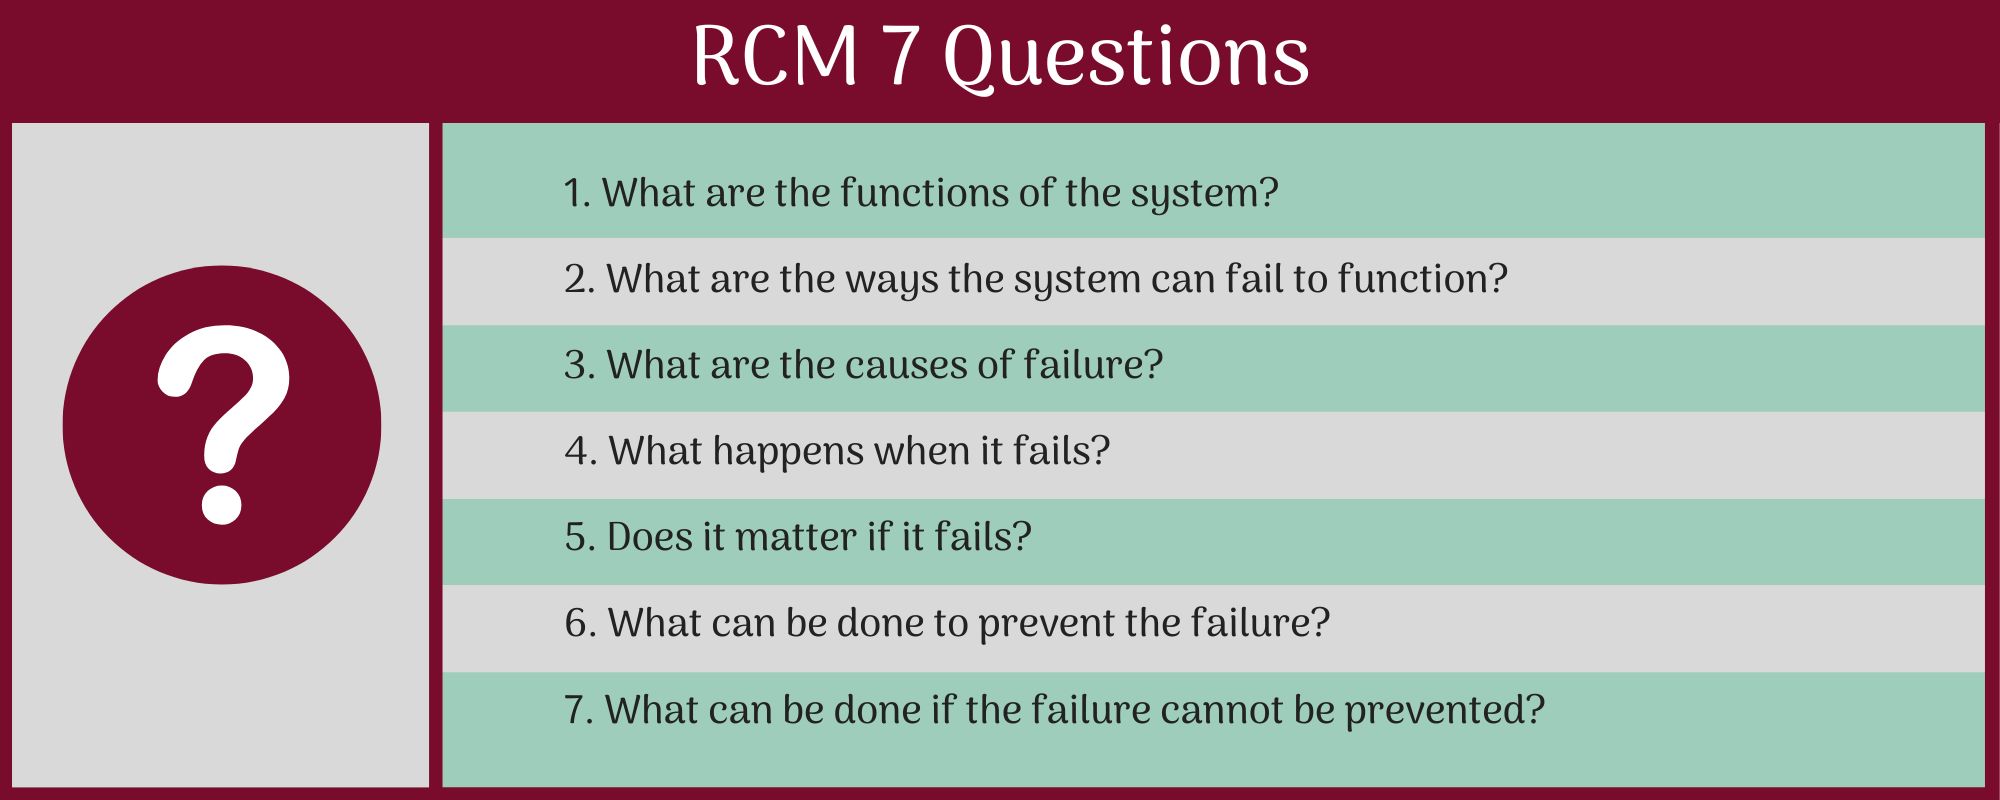 RCM 7 Questions